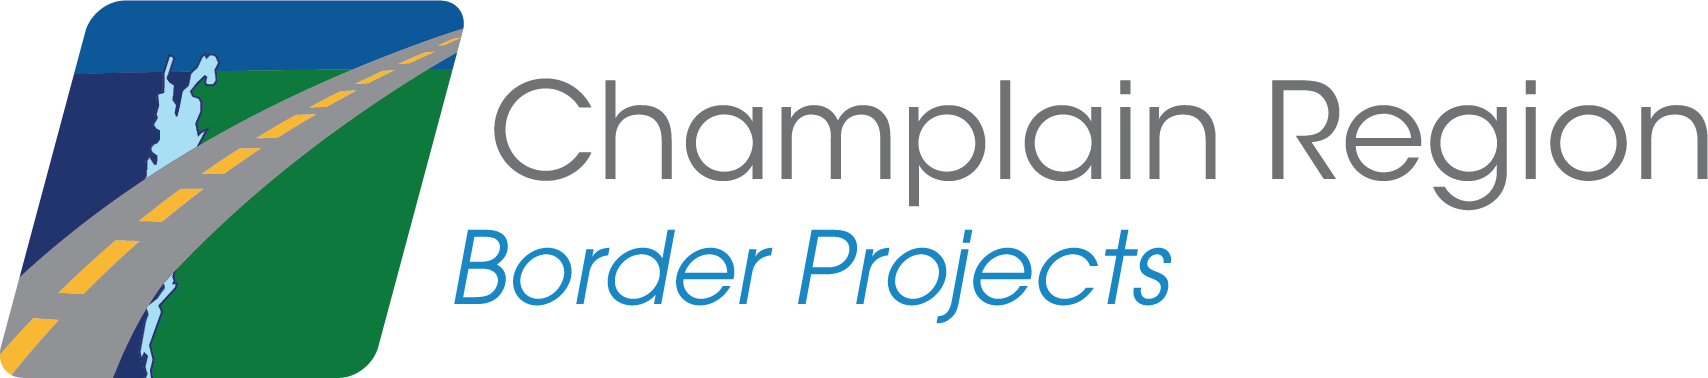 Champlain Region Border Projects Logo